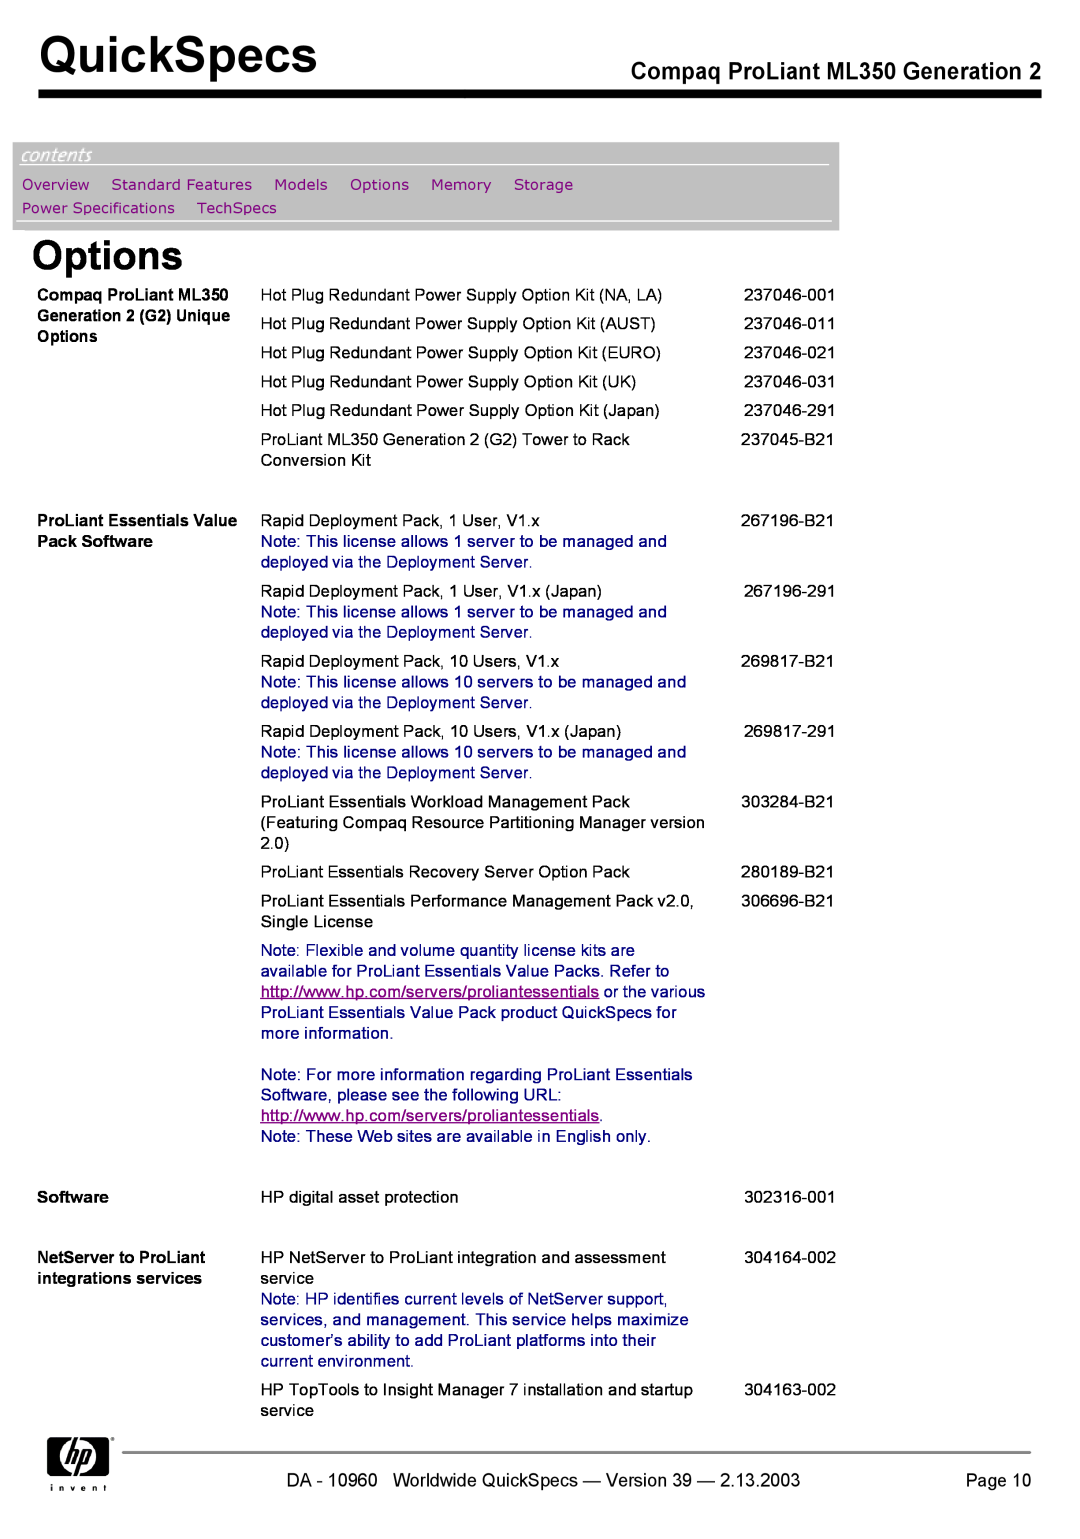 Compaq specifications Options, Compaq ProLiant ML350 Generation, DA - 10960 Worldwide QuickSpecs - Version 39, Page 